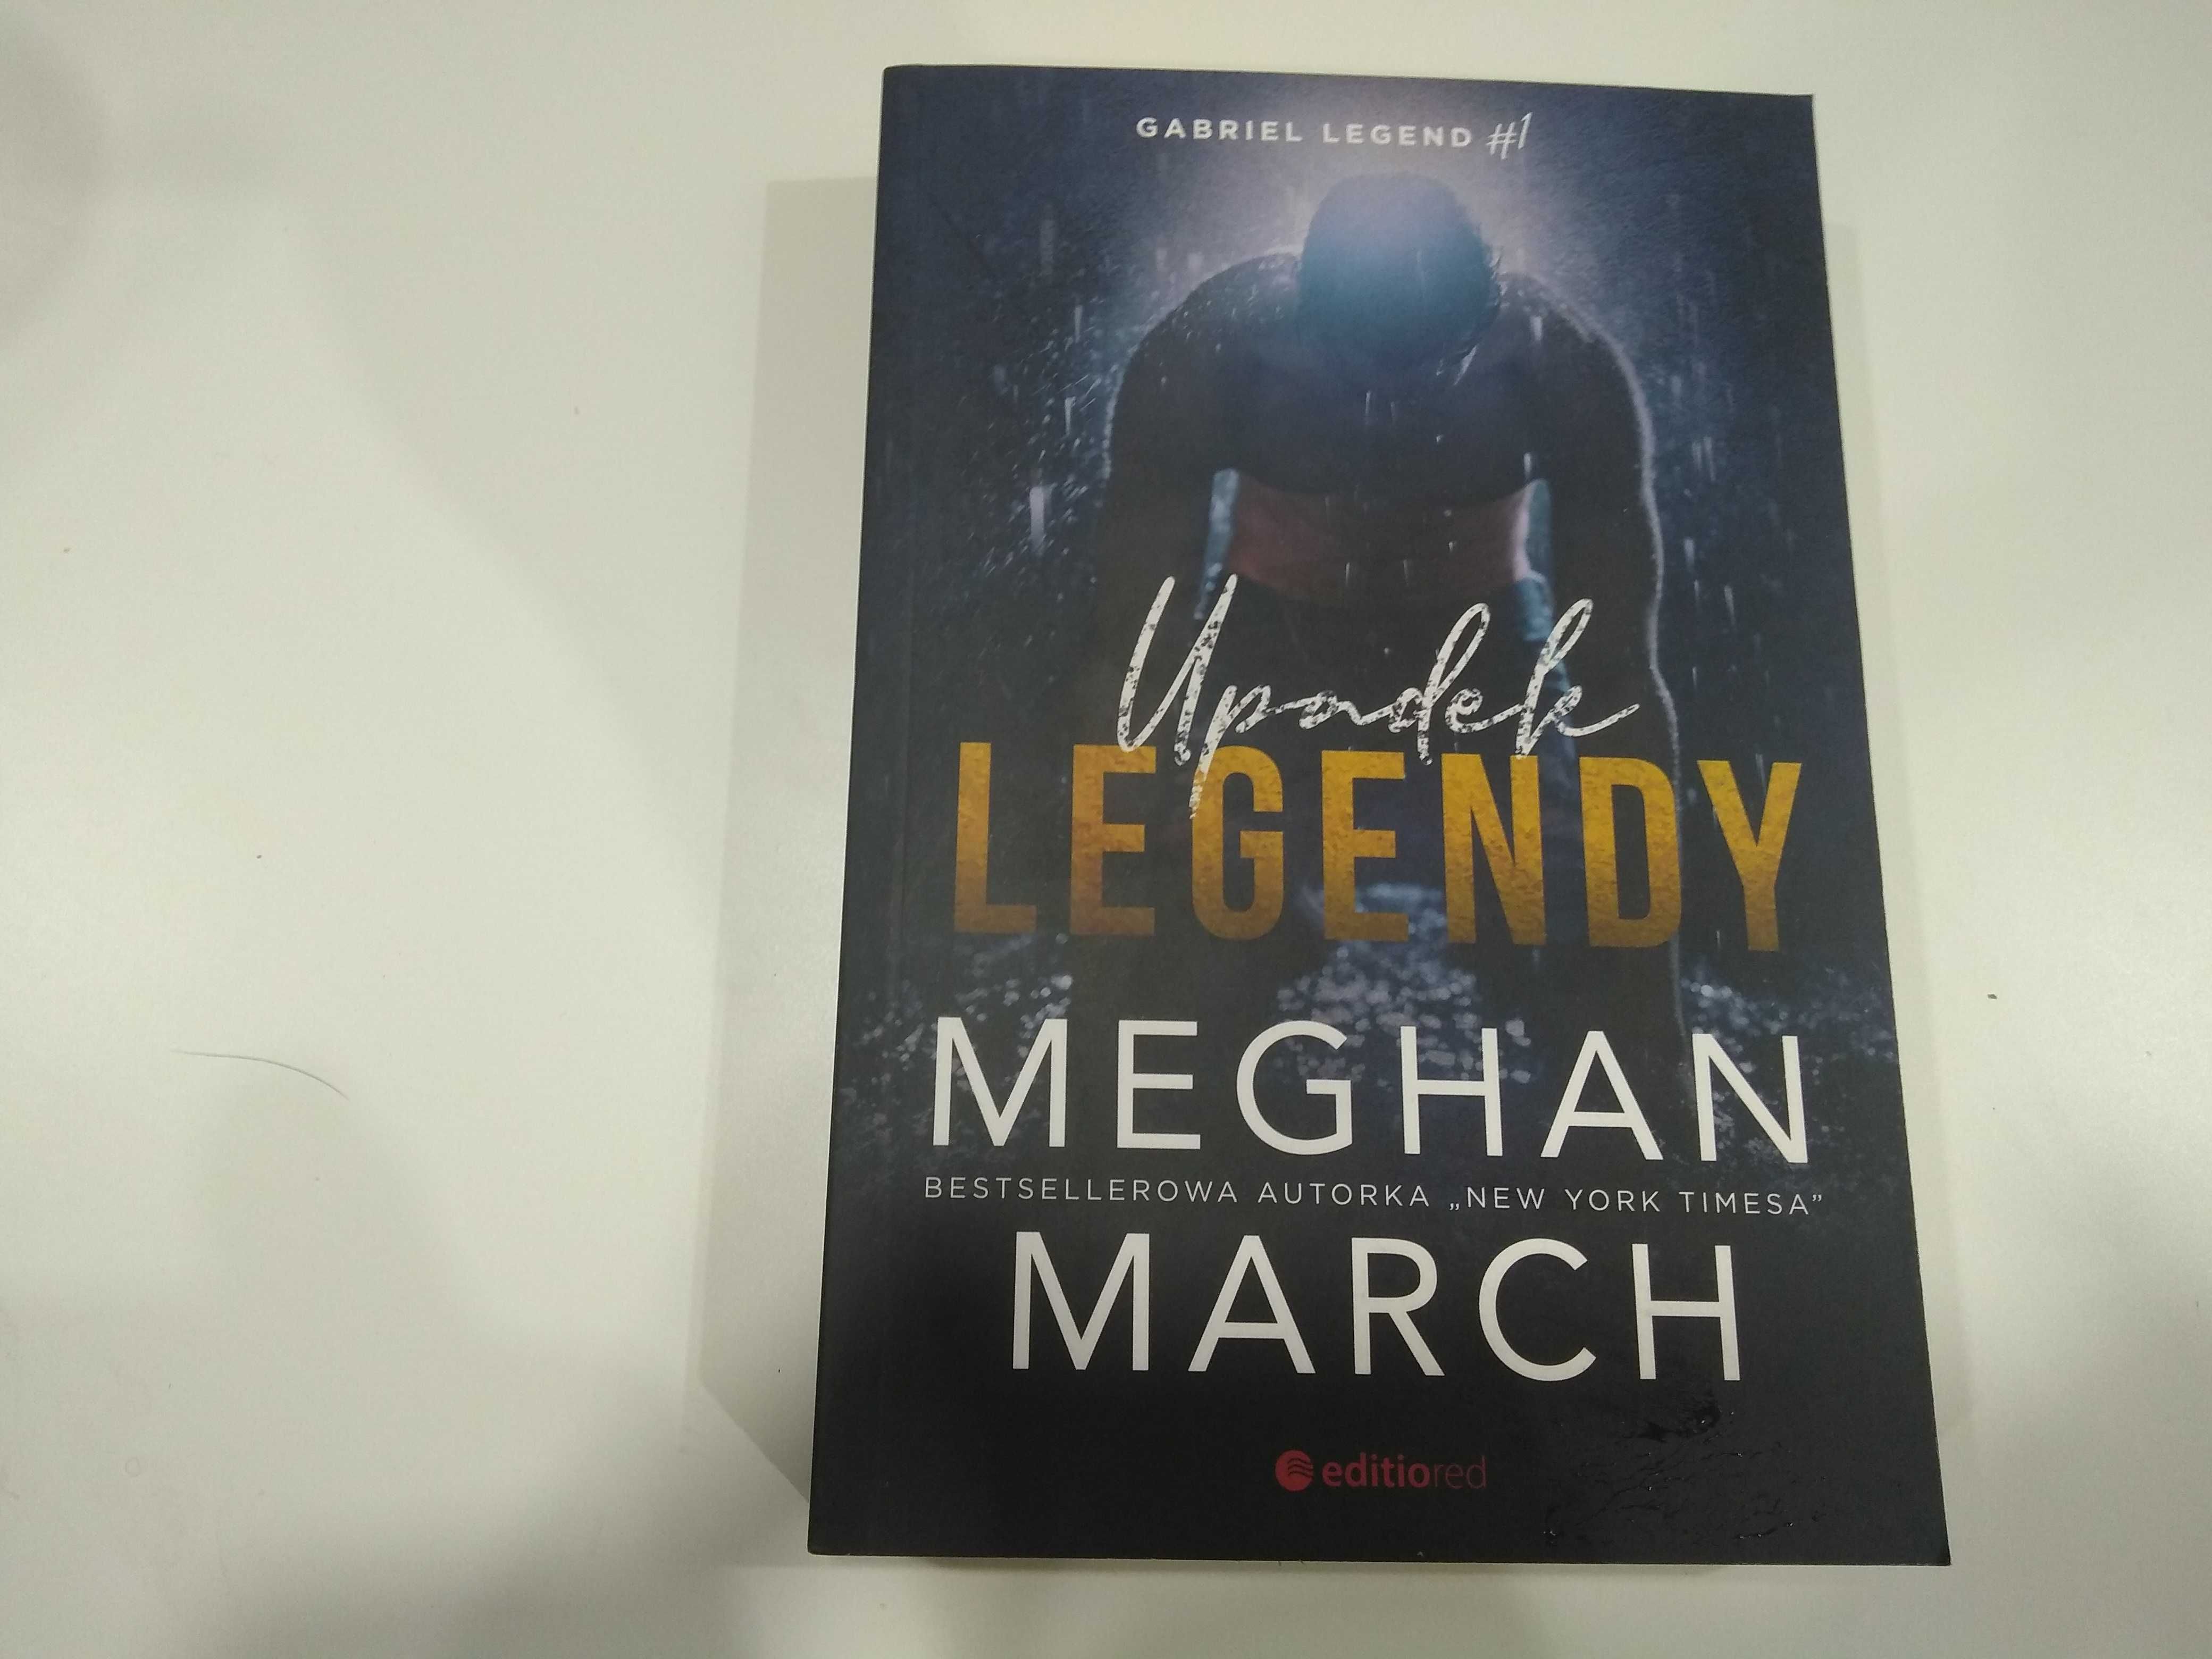 Dobra książka - Upadek legendy Meghan March (NOWA)